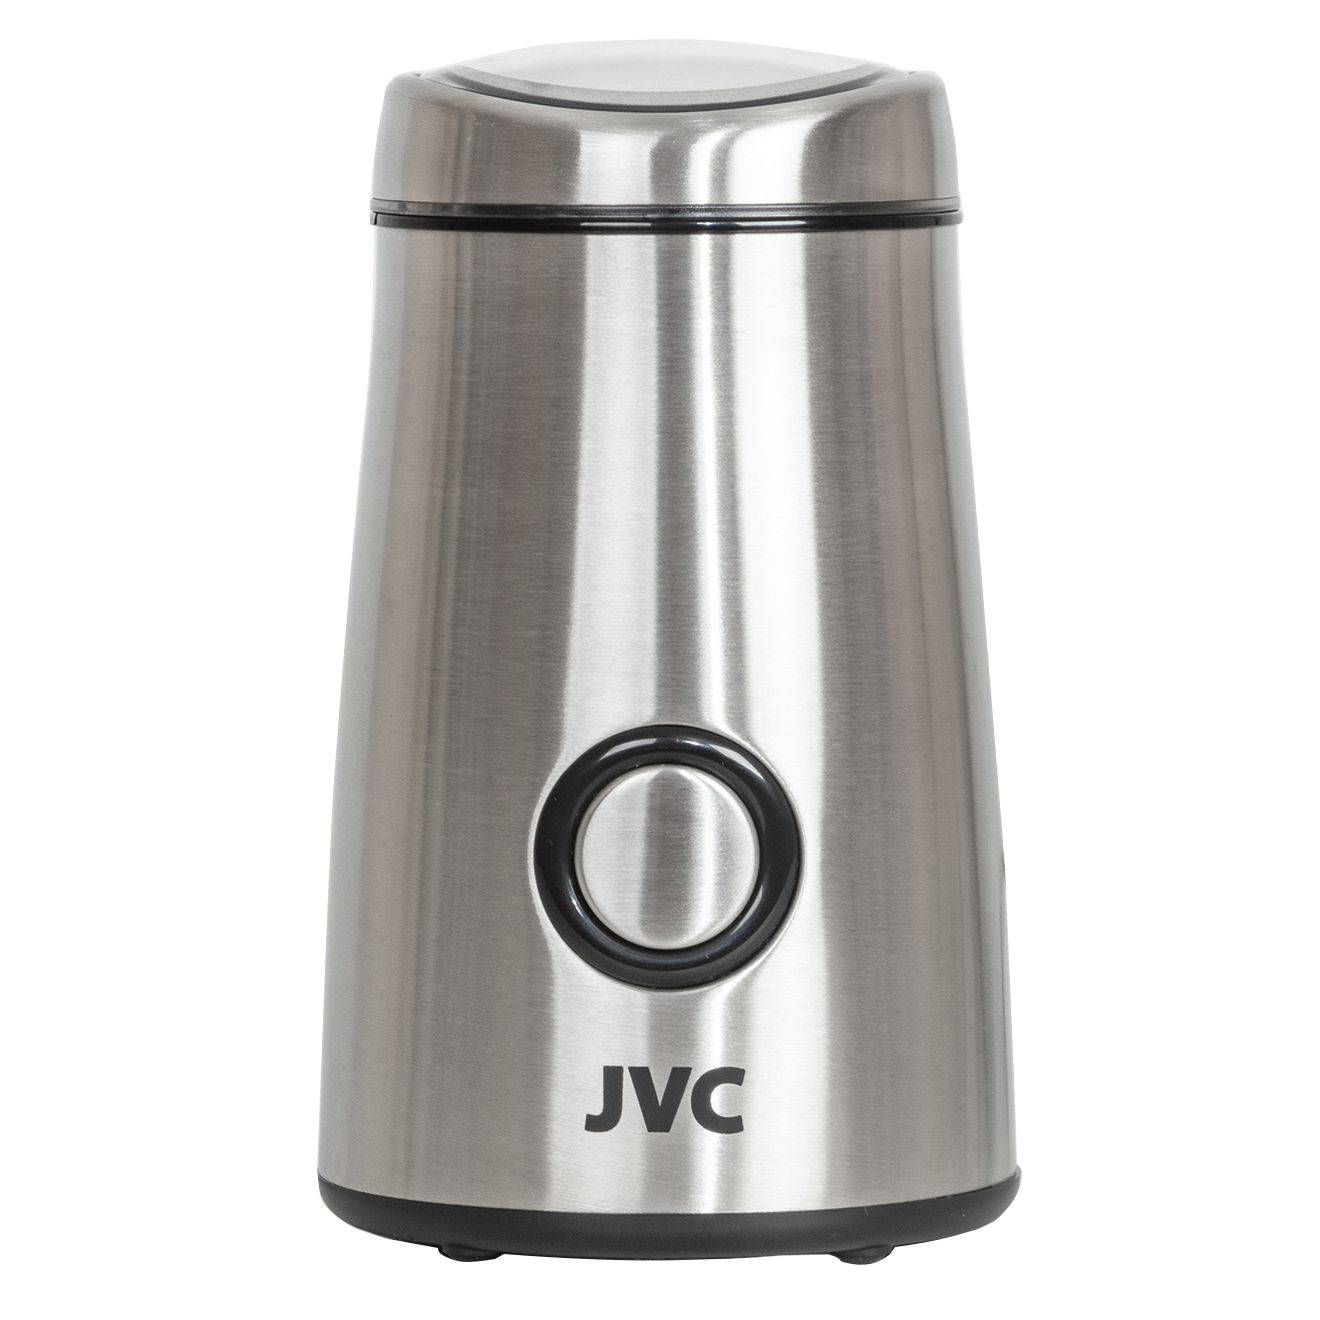 Кофемолка JVC опт JK-CG017 серебристый кофемолка jvc jk cg017 серебристый